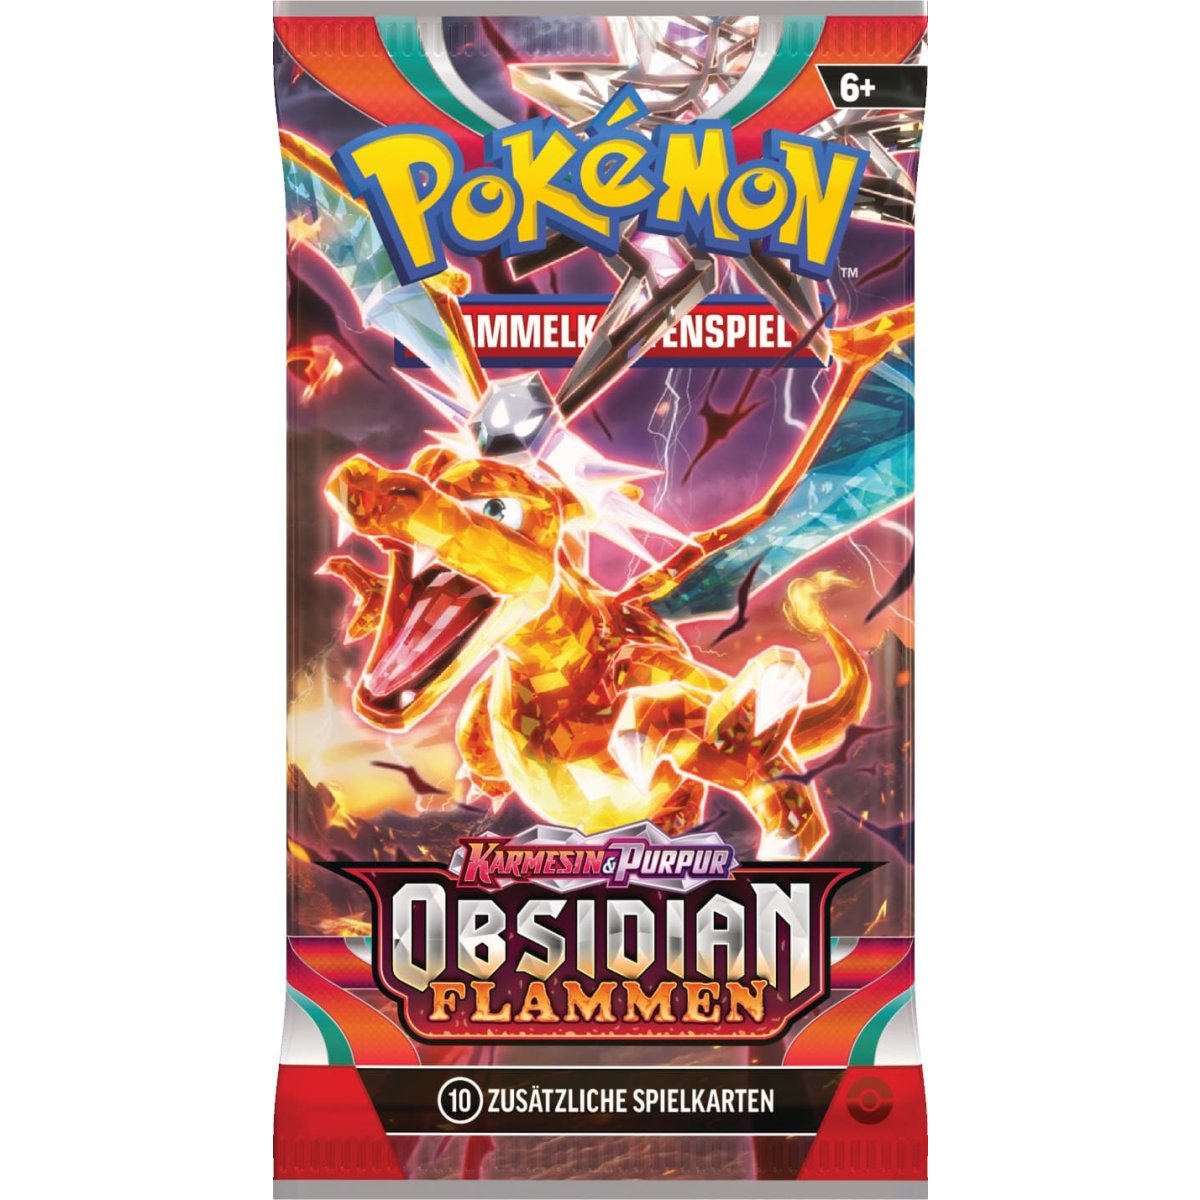 Pokémon Karmesin & Purpur Obsidian Flammen - Booster - deutsch